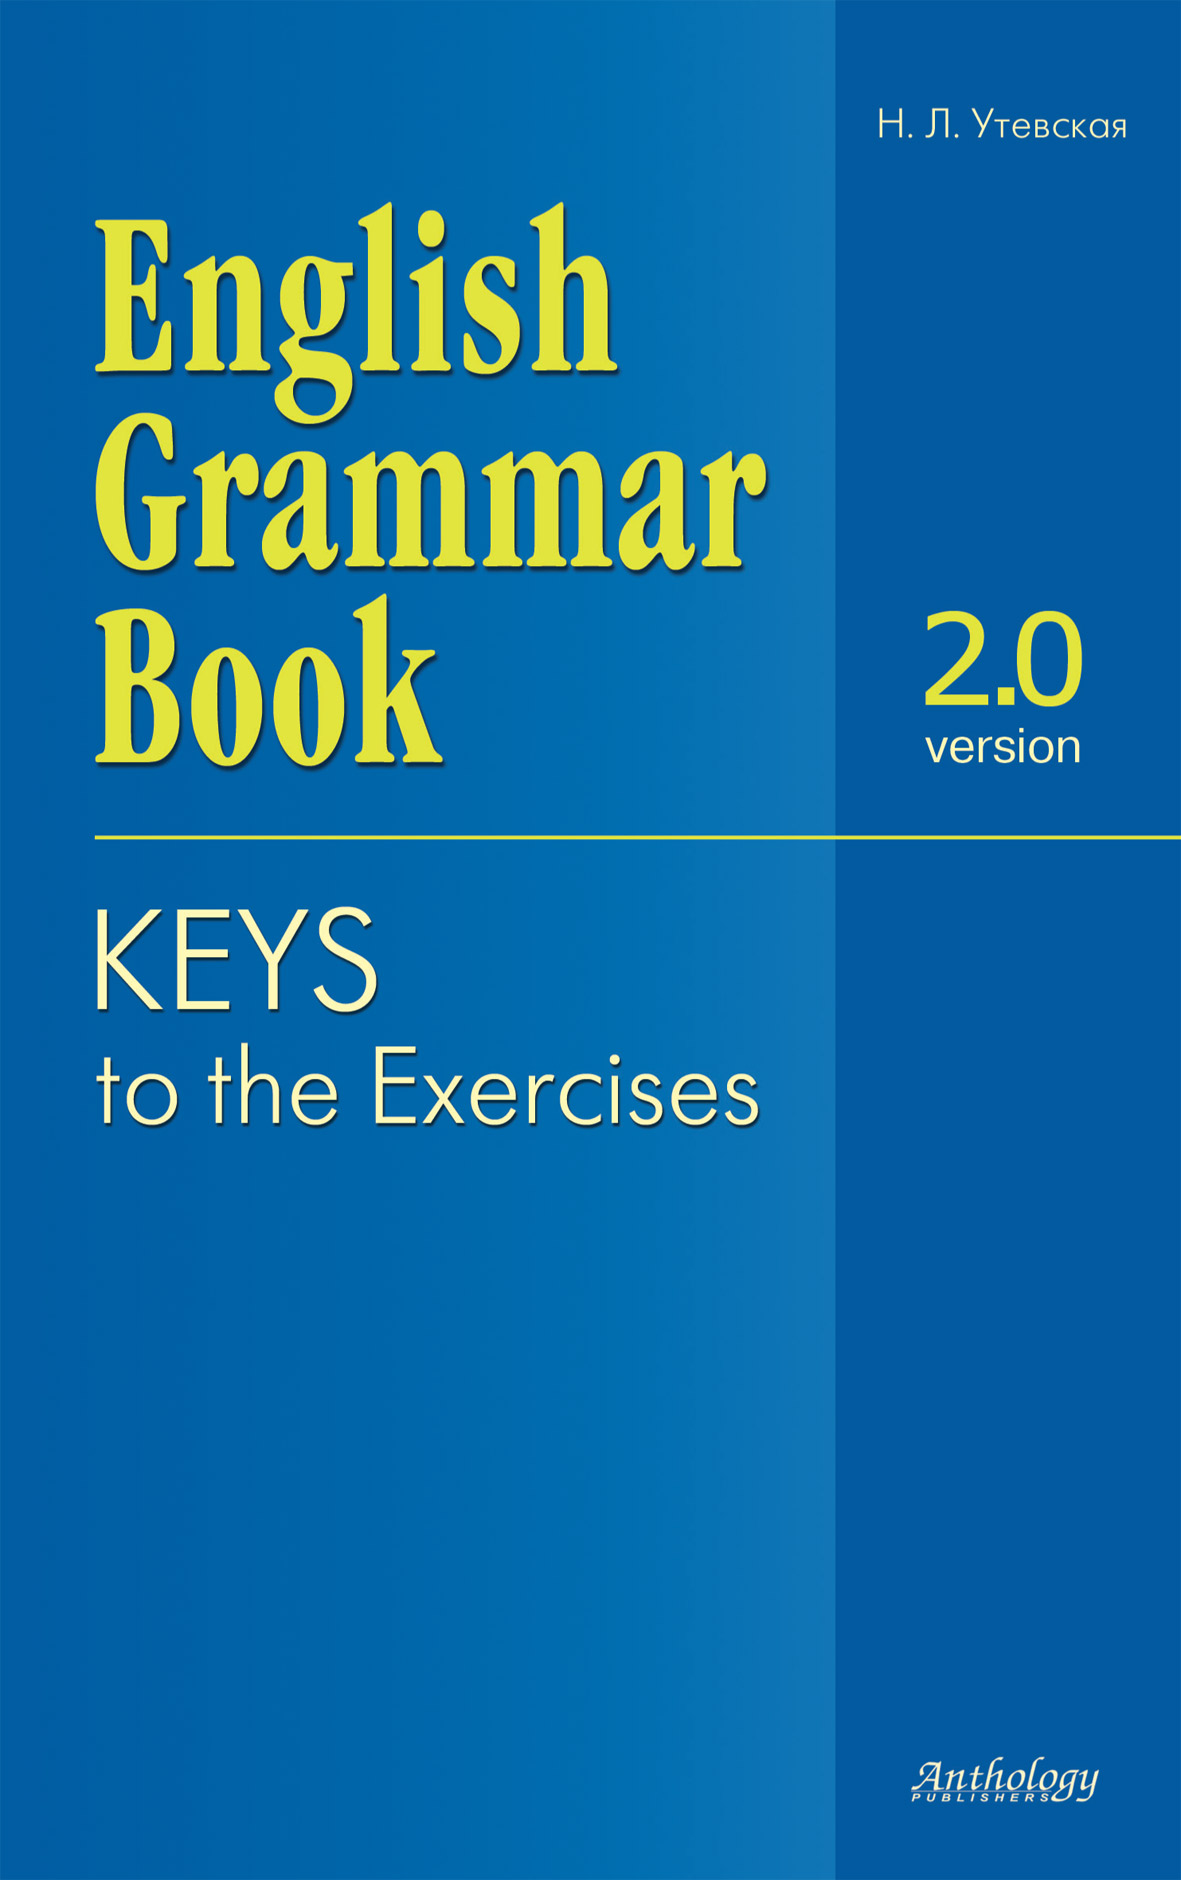 Keys to exercises. English Grammar book Утевская. Утевская English Grammar book Keys. English Grammar книга. Английская книга грамматики.